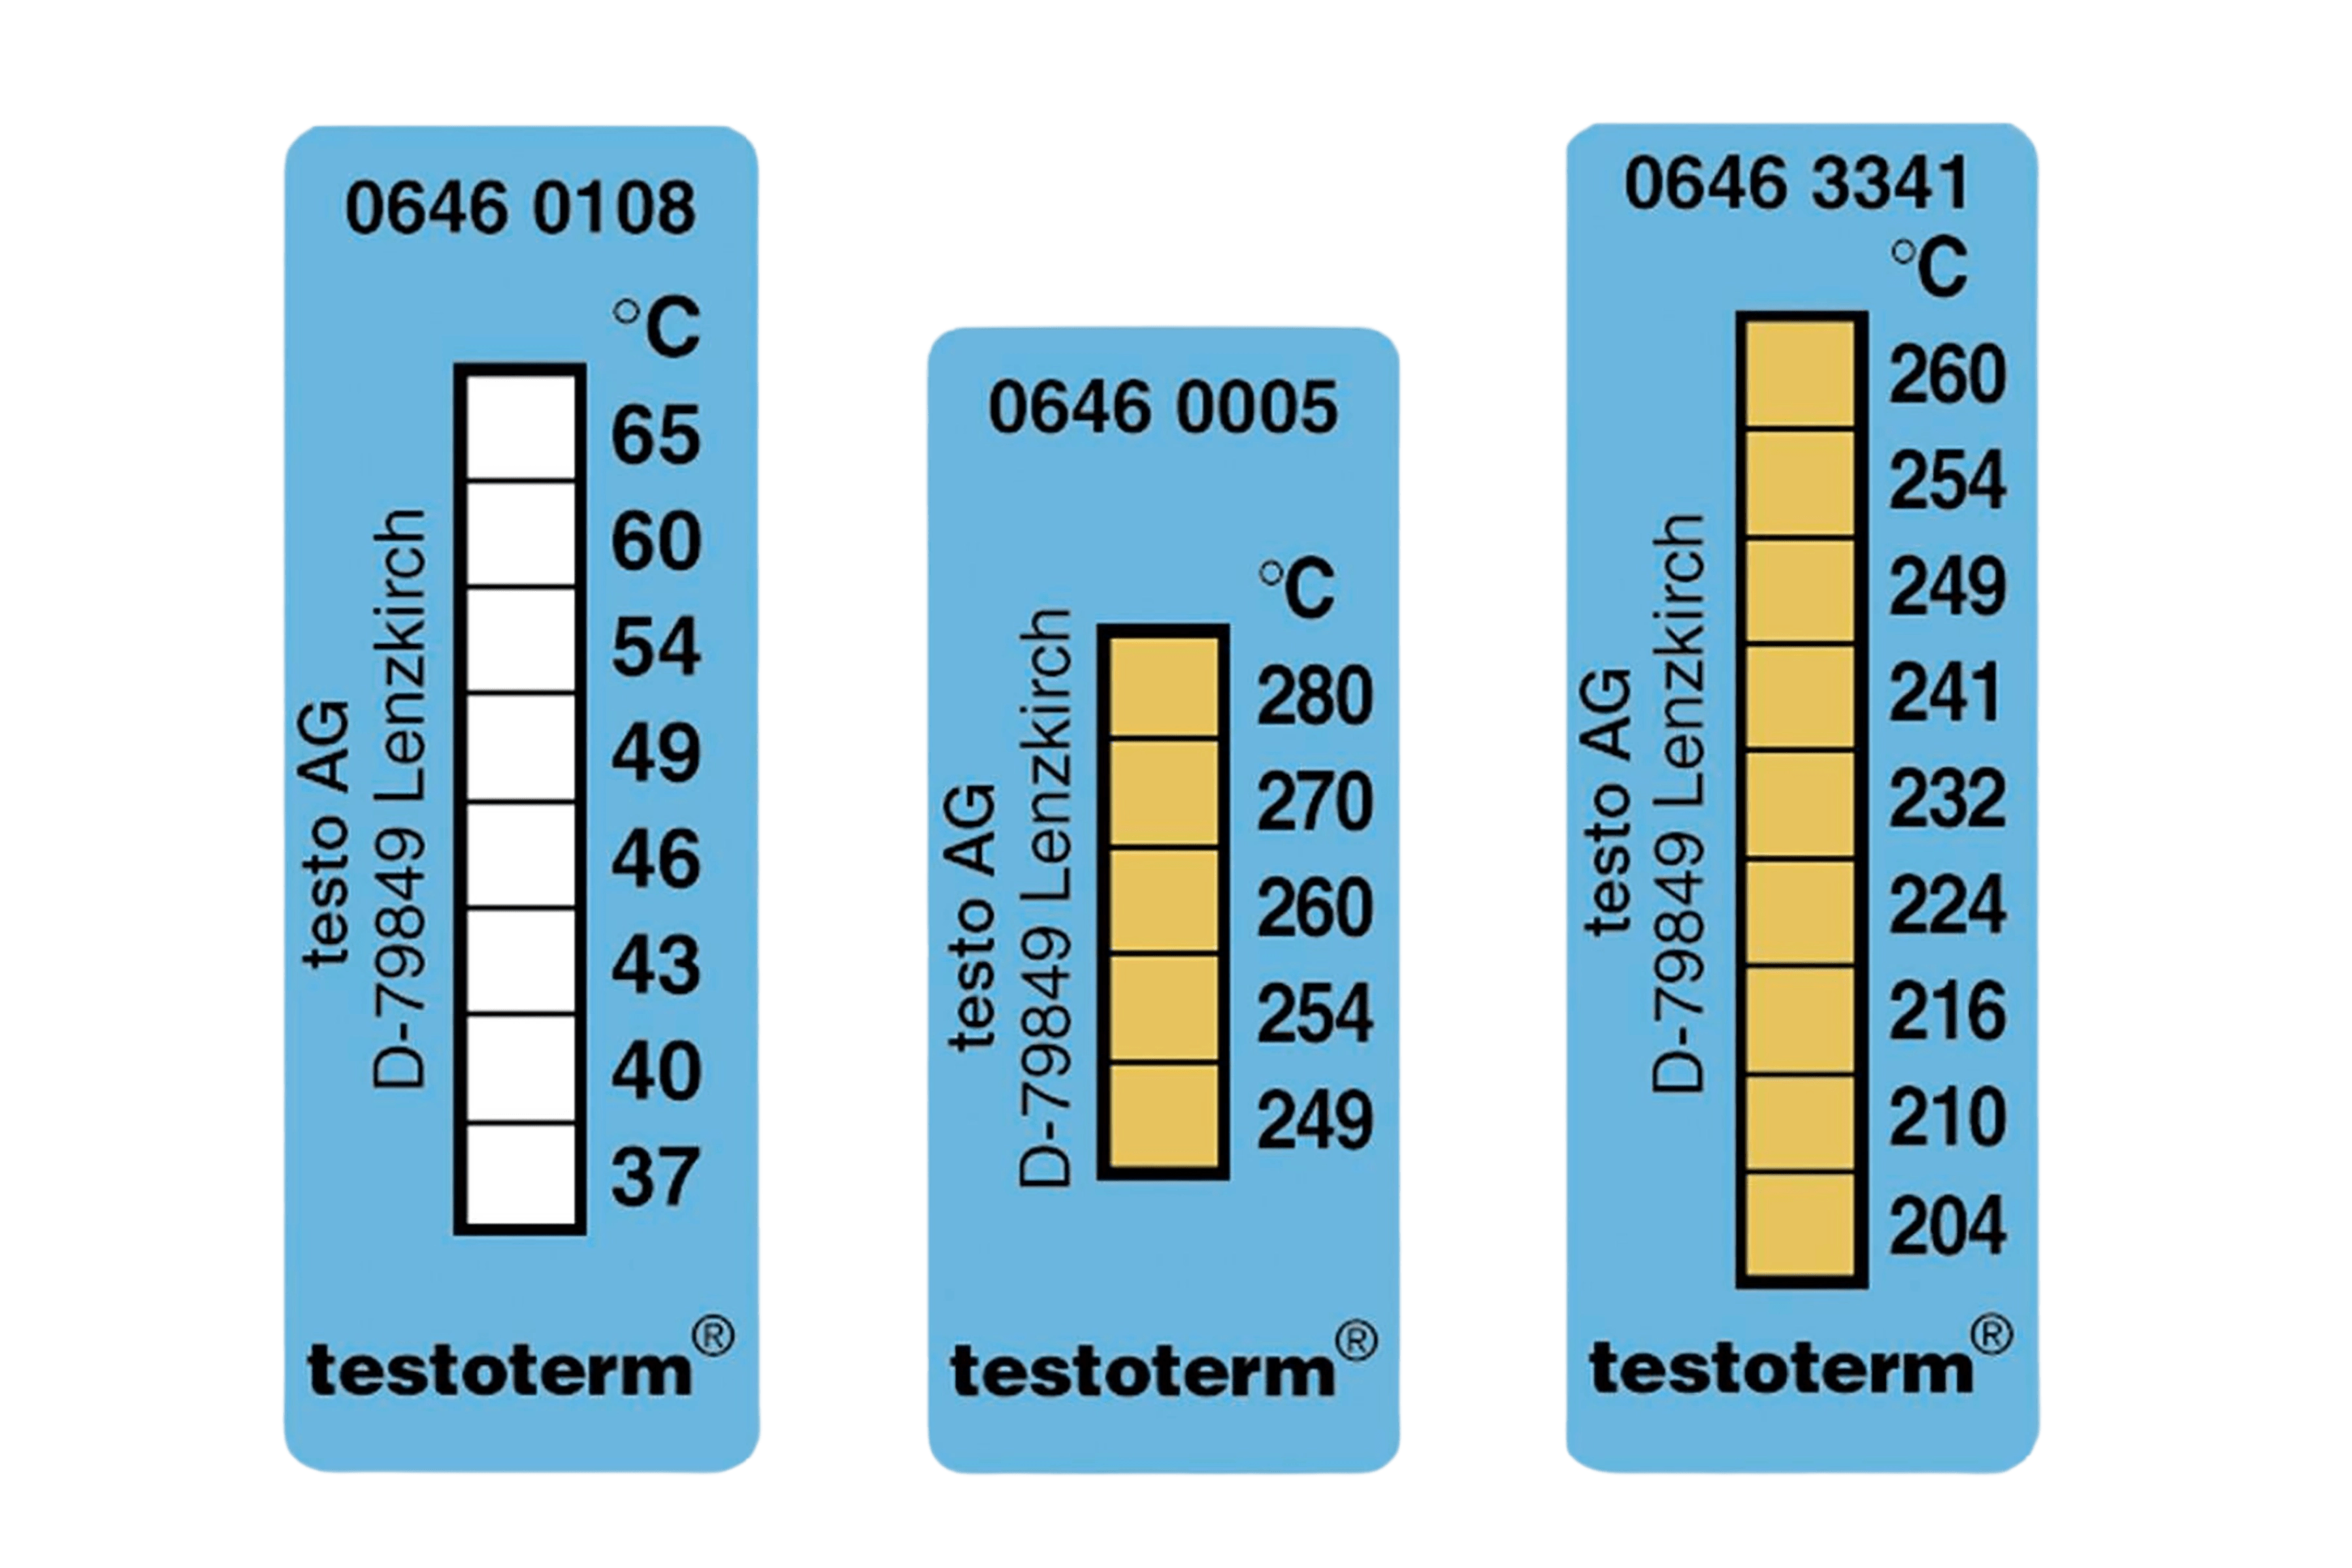 https://static.testo.com/image/upload/v1697122405/HQ/testo-temperature-measuring-strips-product-range.png